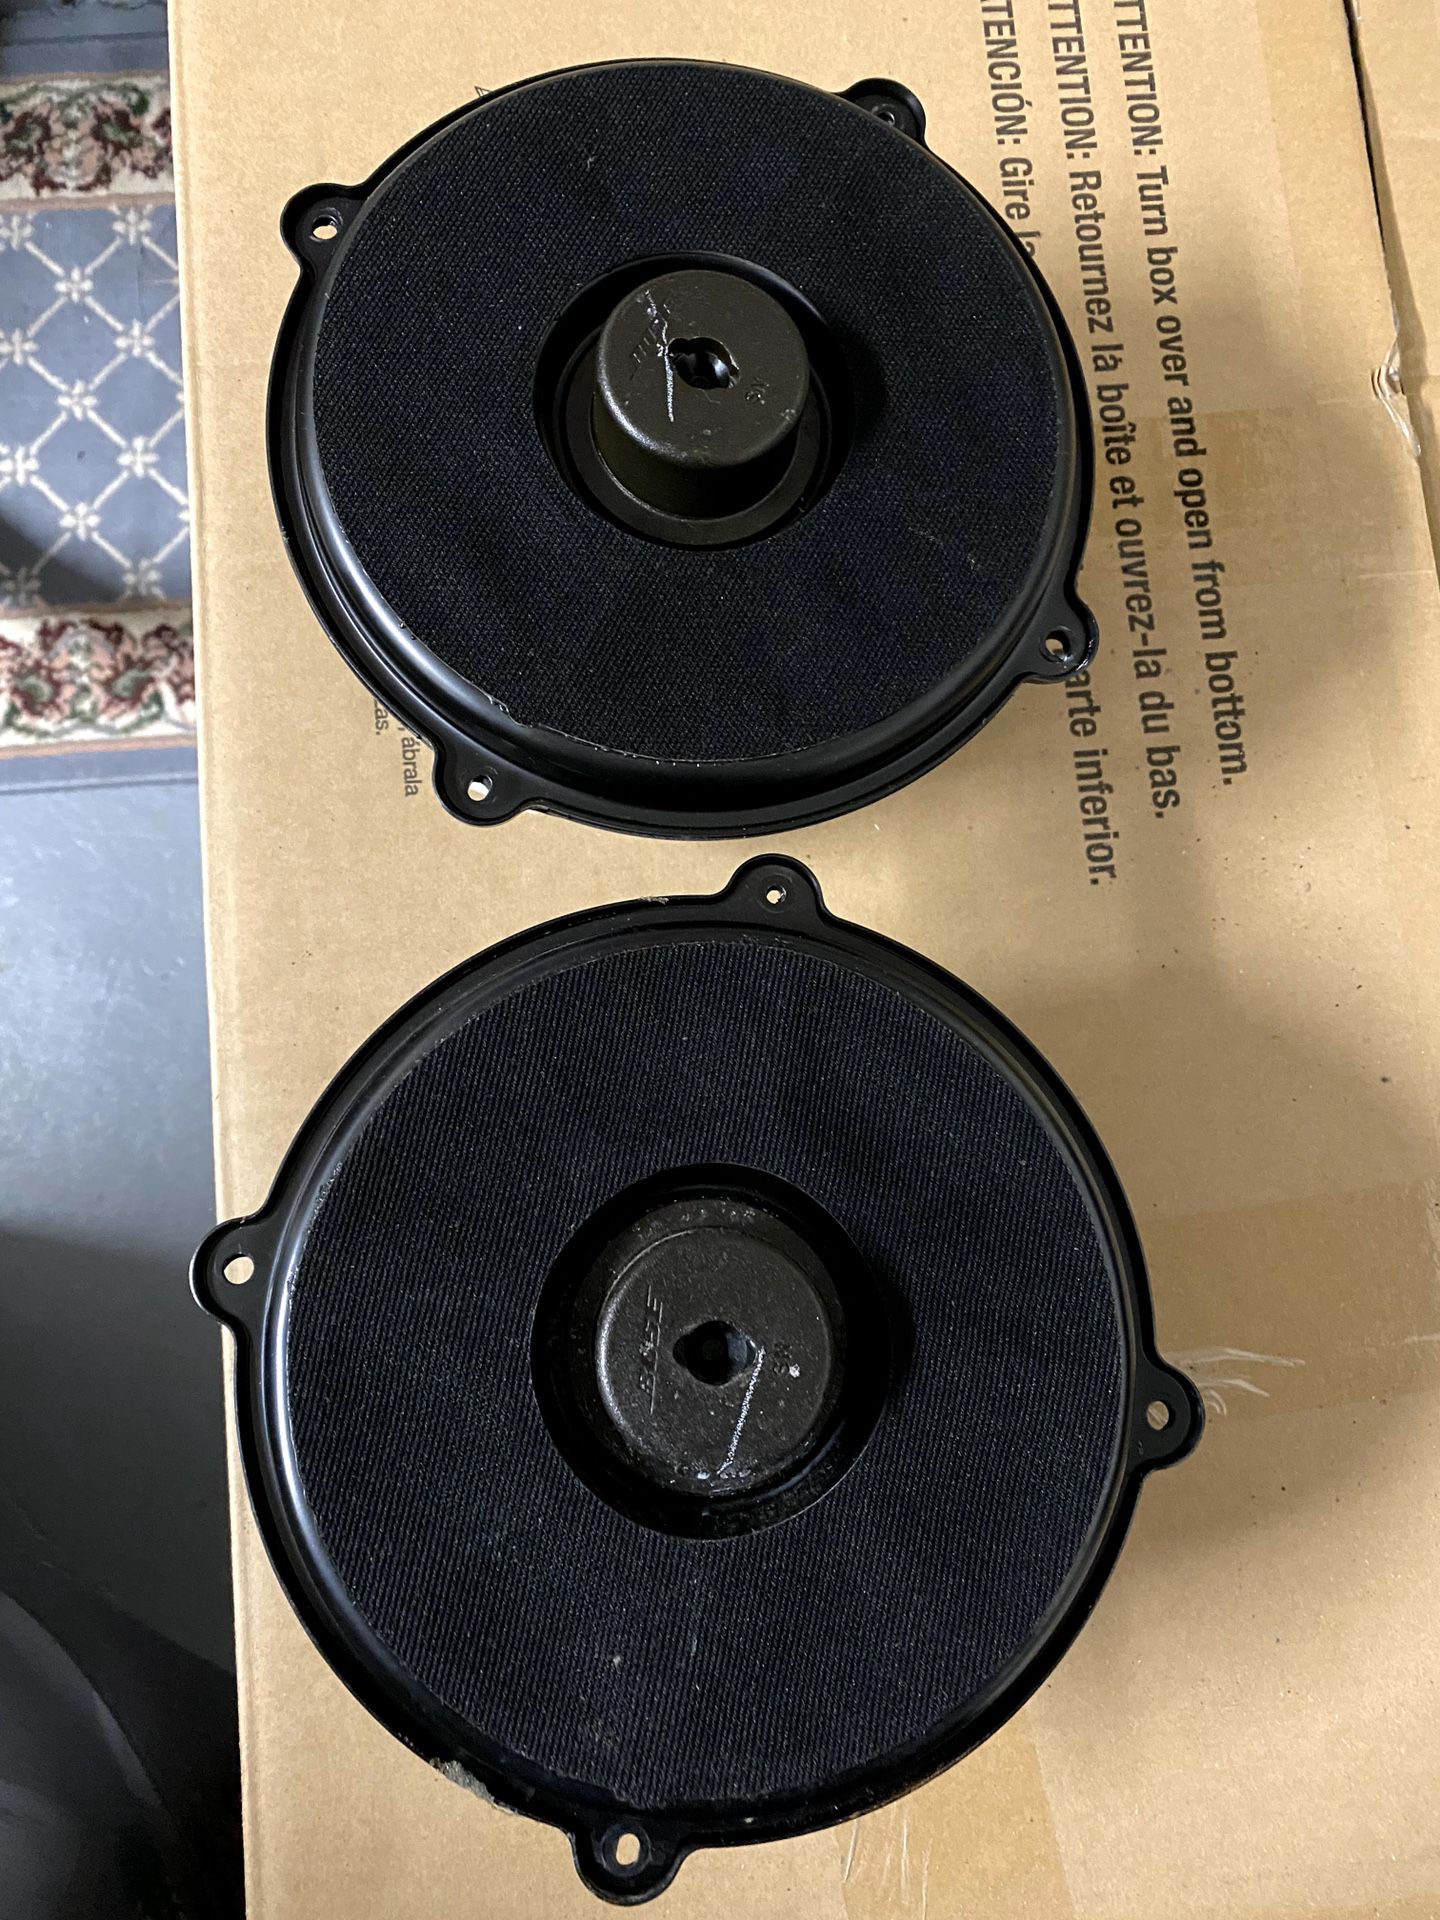 Mx-5 Miata Bose speakers